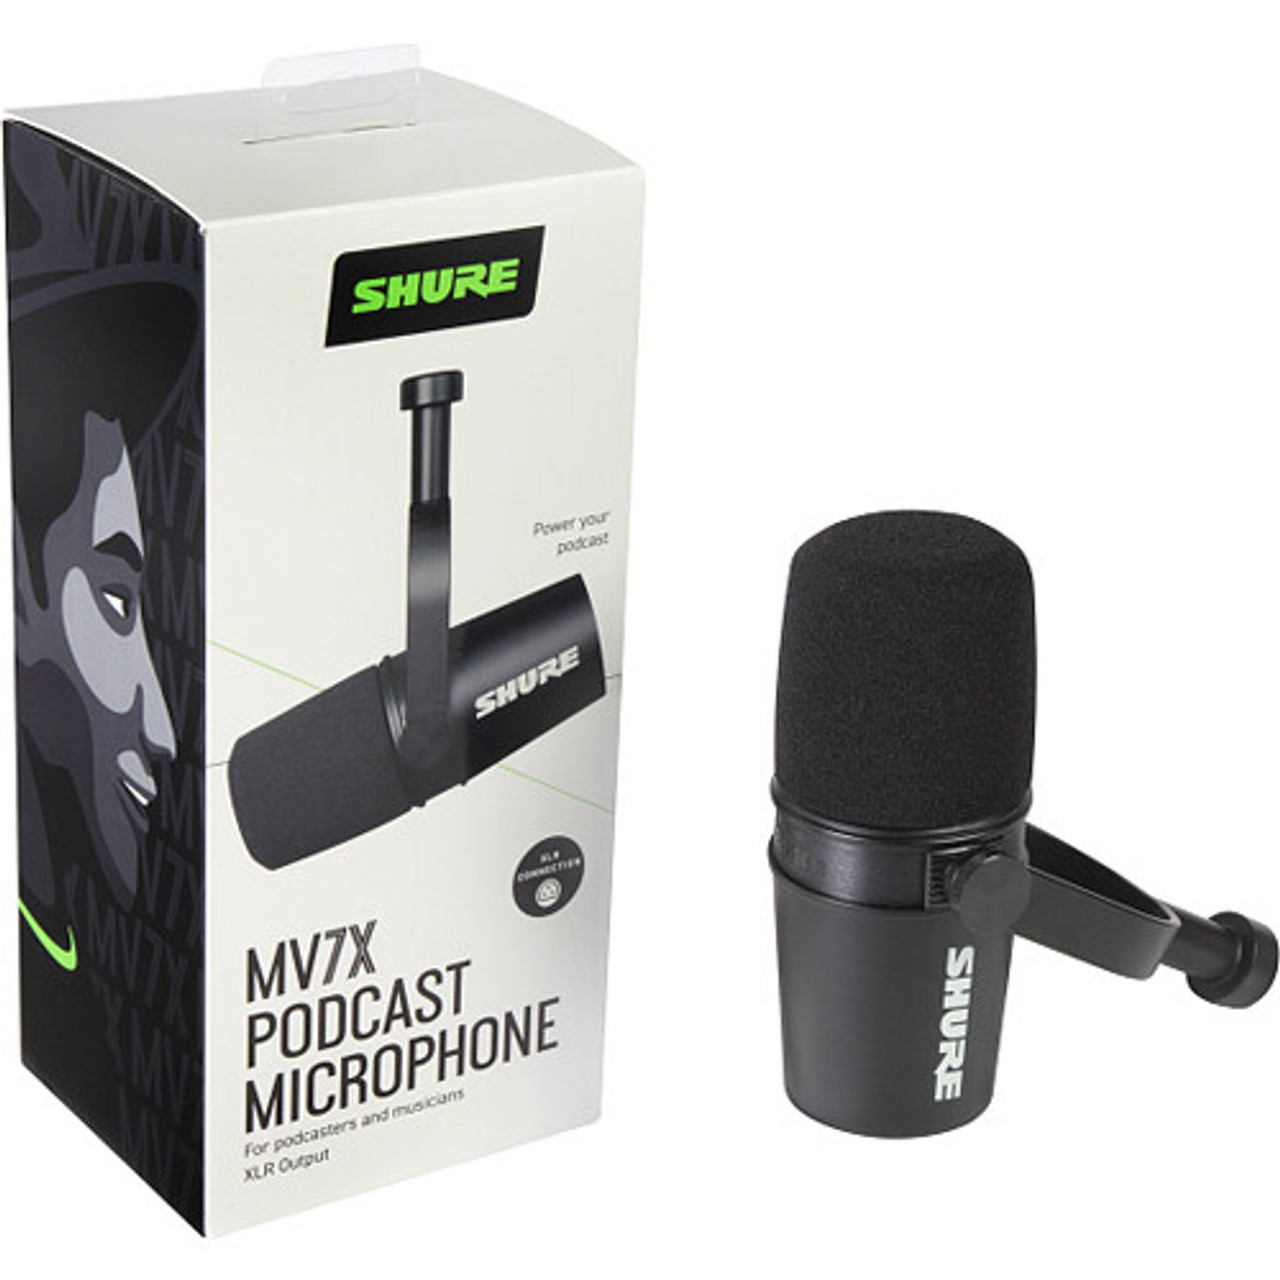 Shure MV7-K-BNDL - Podcast Microphone Bundle with Mini Tripod